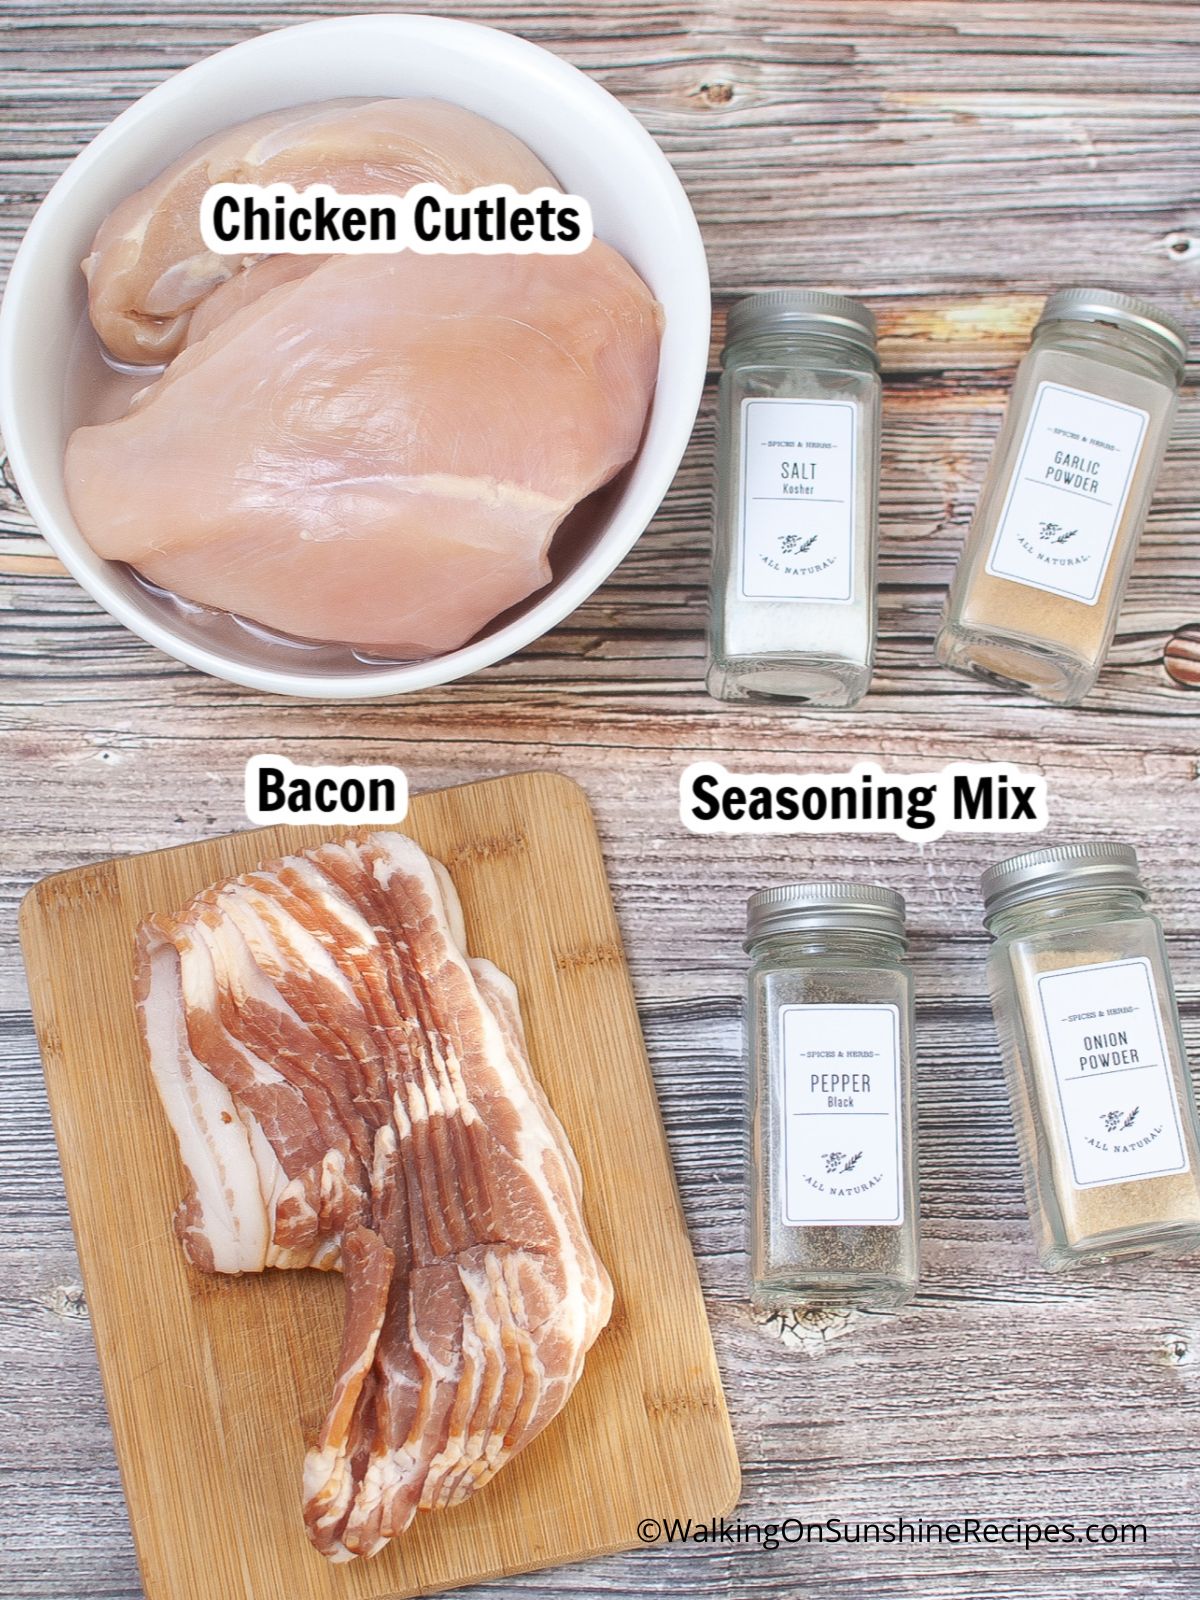 Ingredients, chicken cutlets, bacon, seasonings.